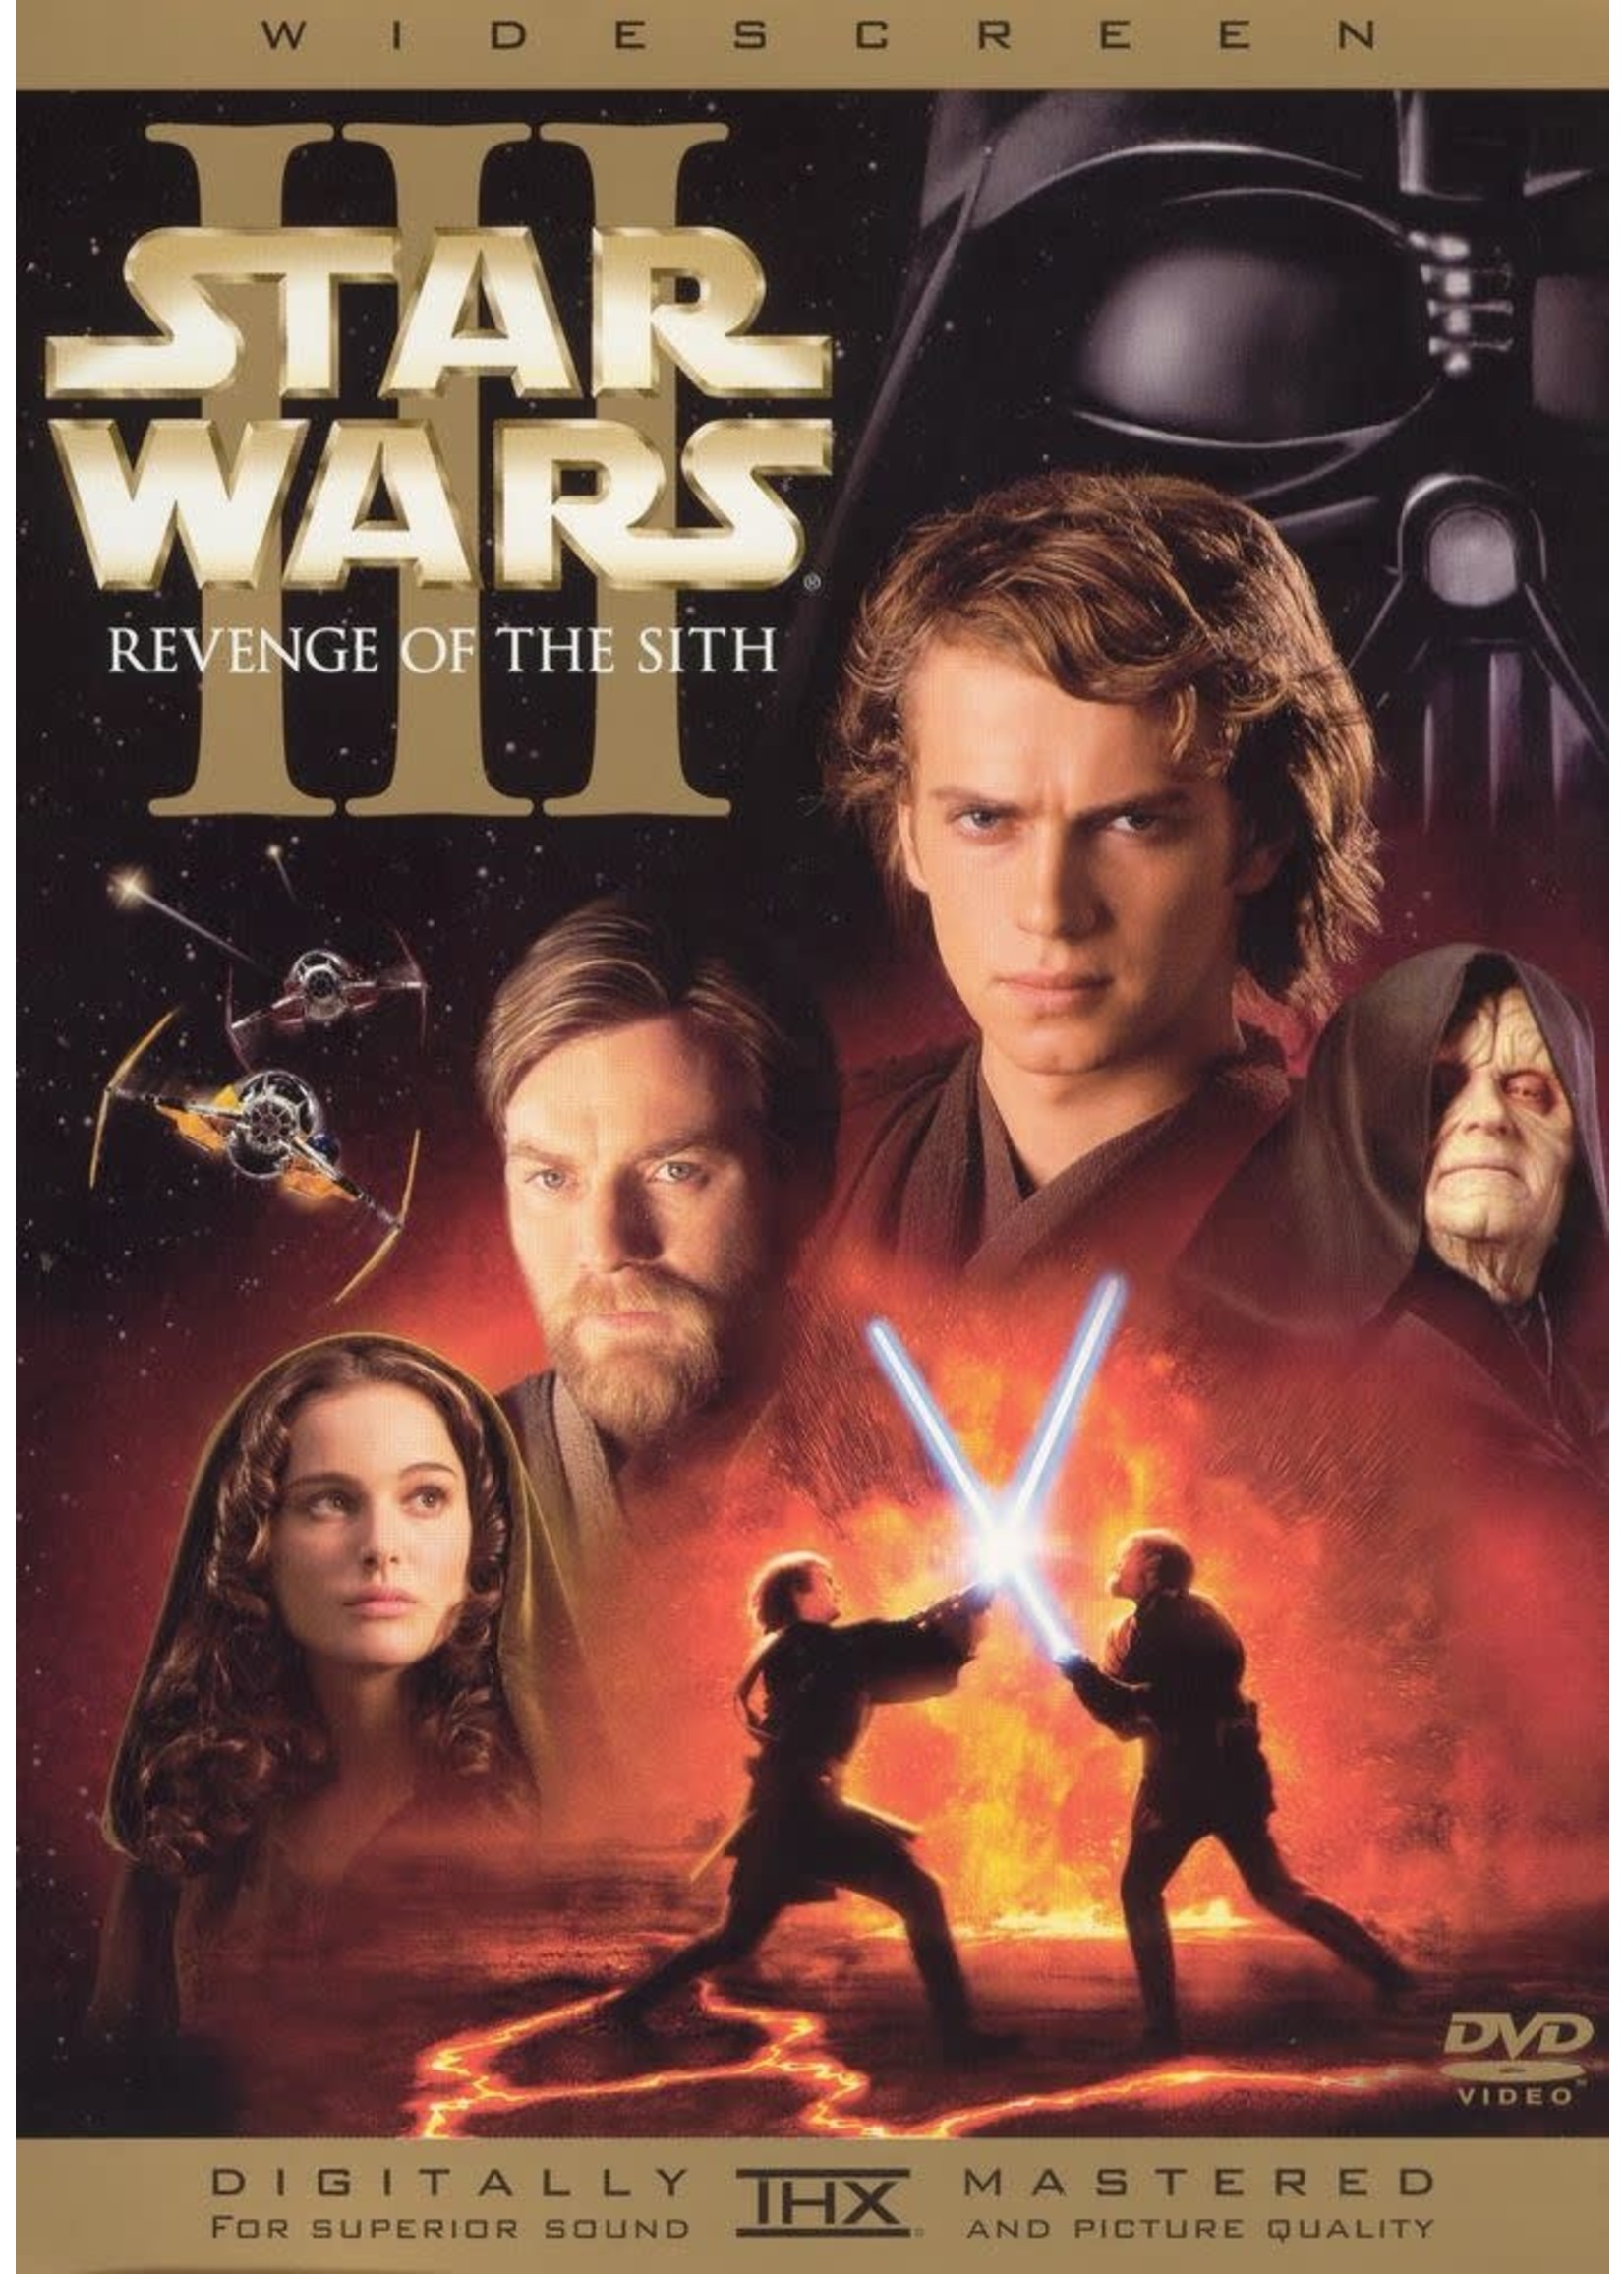 Star Wars Episode 3-Revenge of the Sith (DVD)